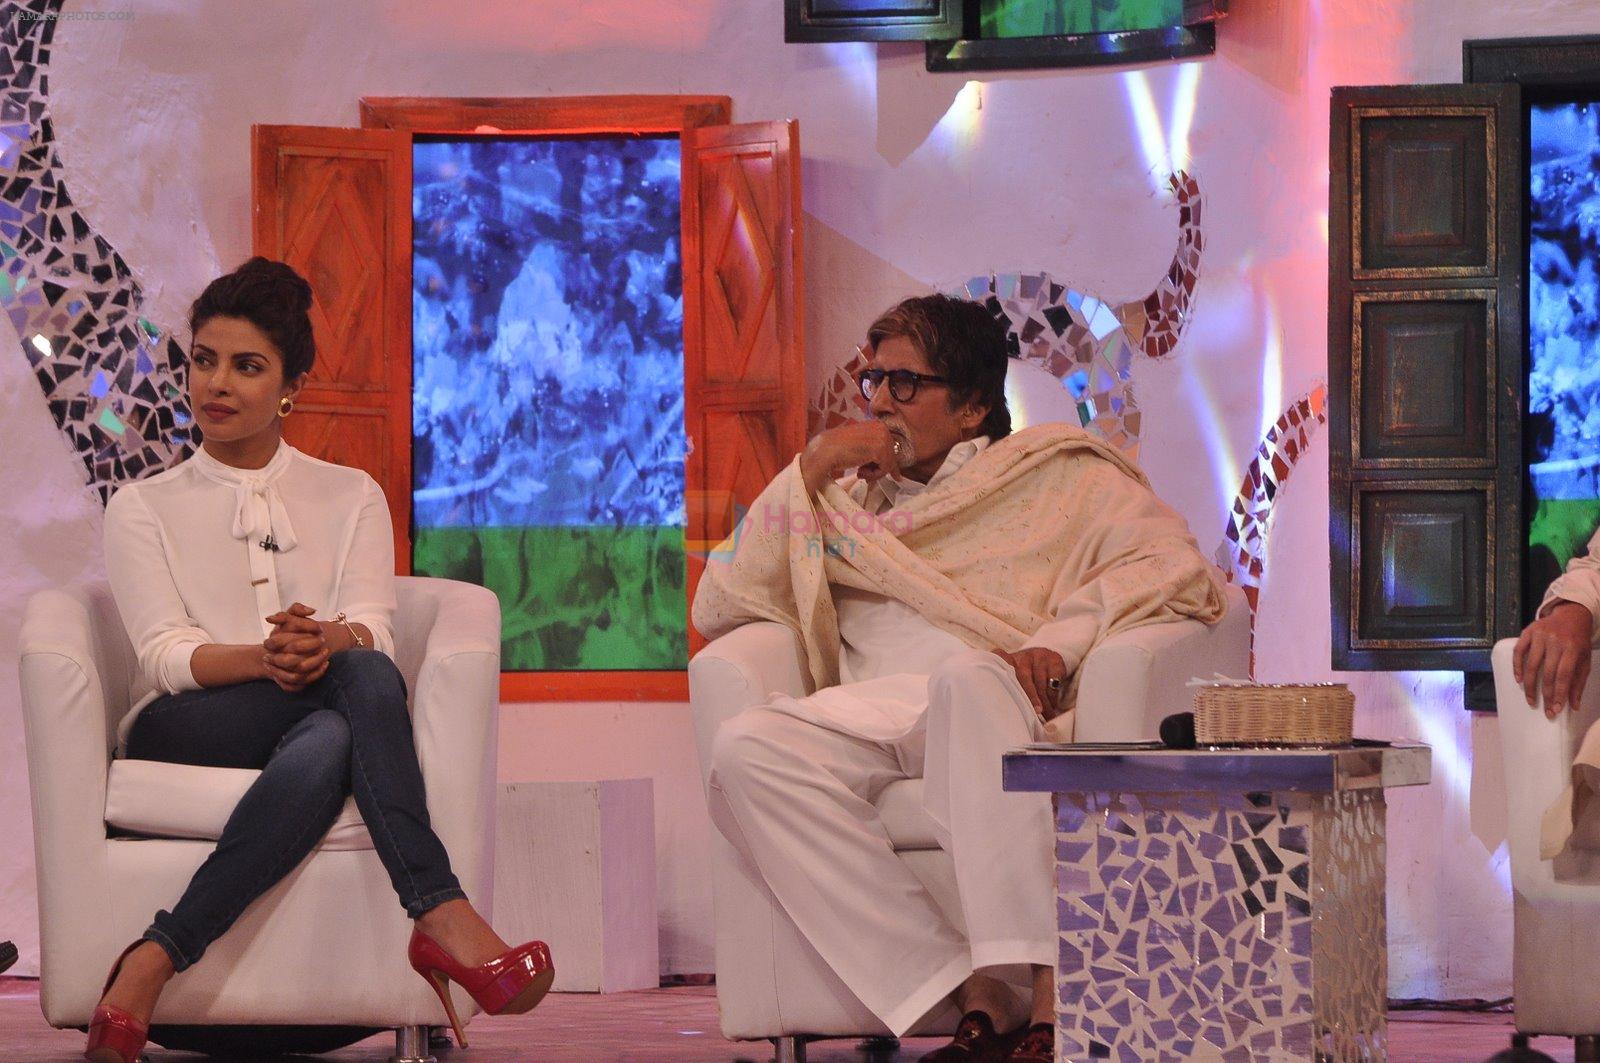 Amitabh Bachchan at NDTV cleanathon in Mumbai on 14th Dec 2014